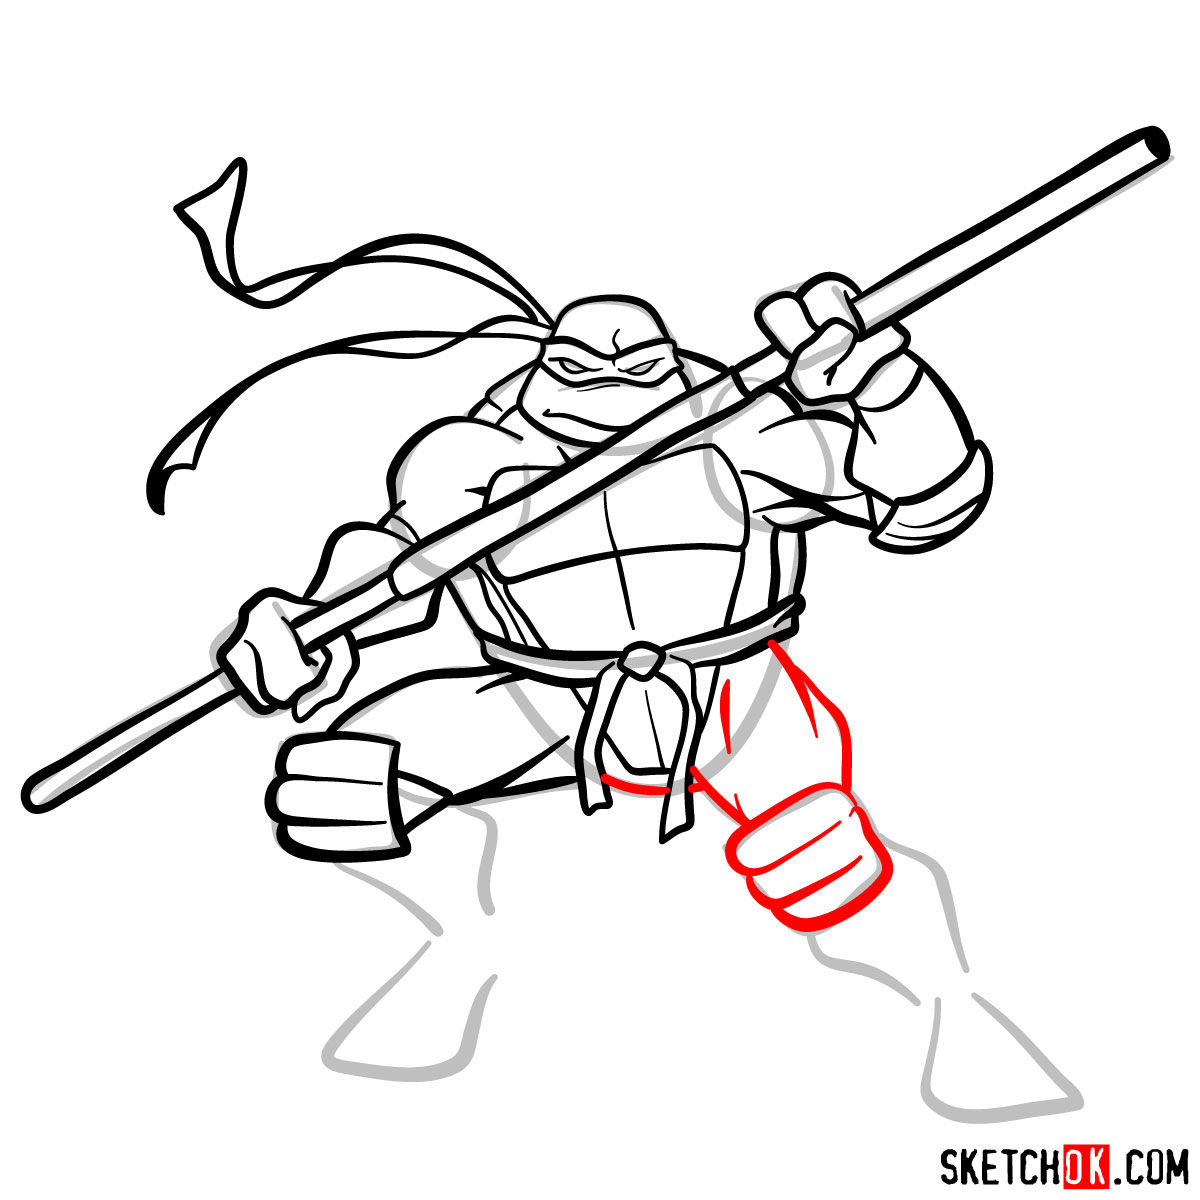 How to draw Donatello ninja turtle - step 12